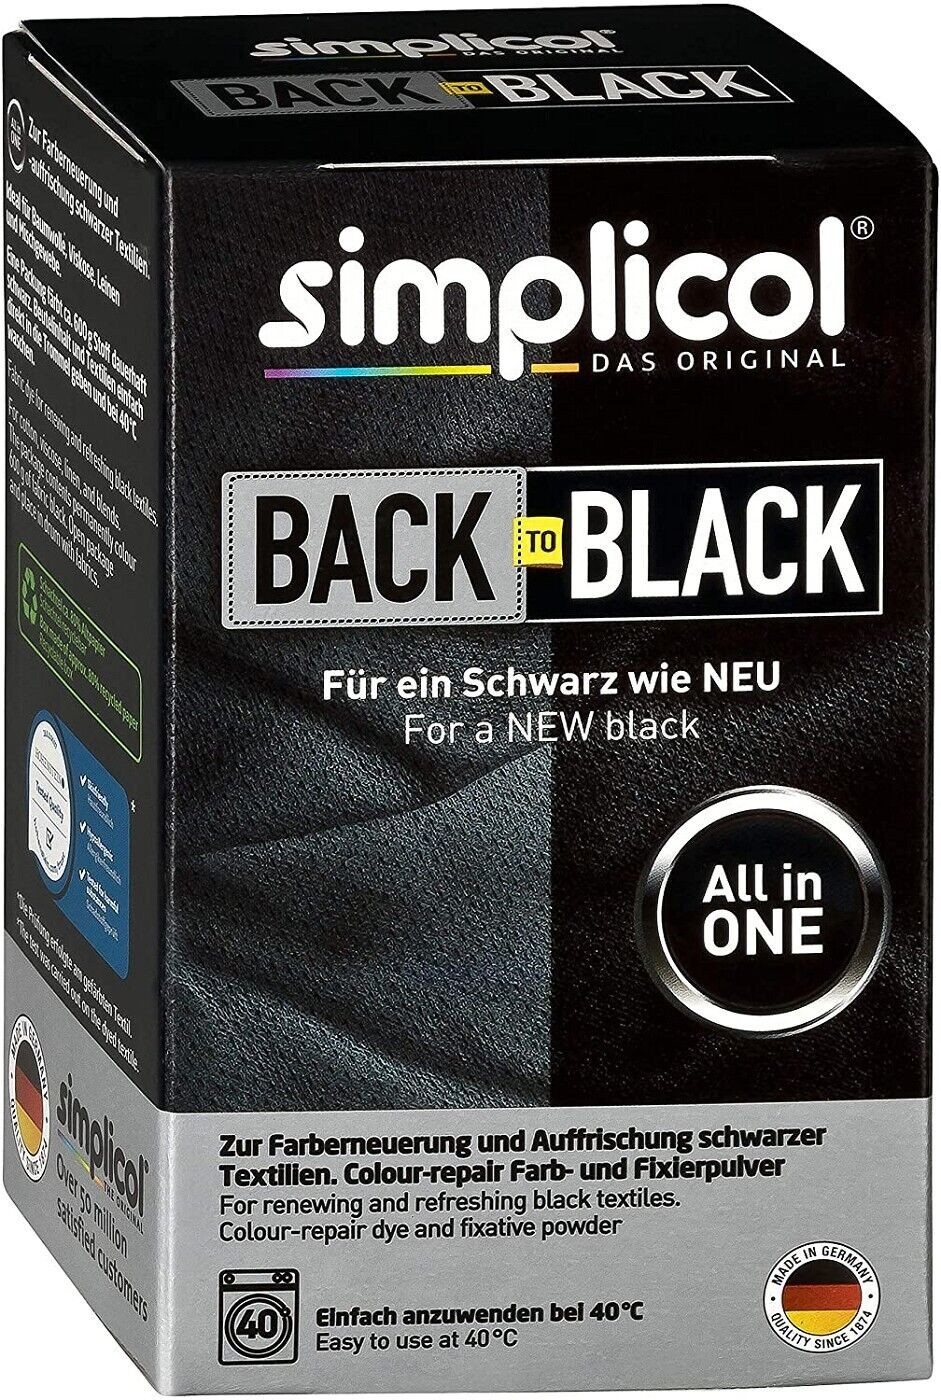 Simplicol Farberneuerung Back to Black 1Stück